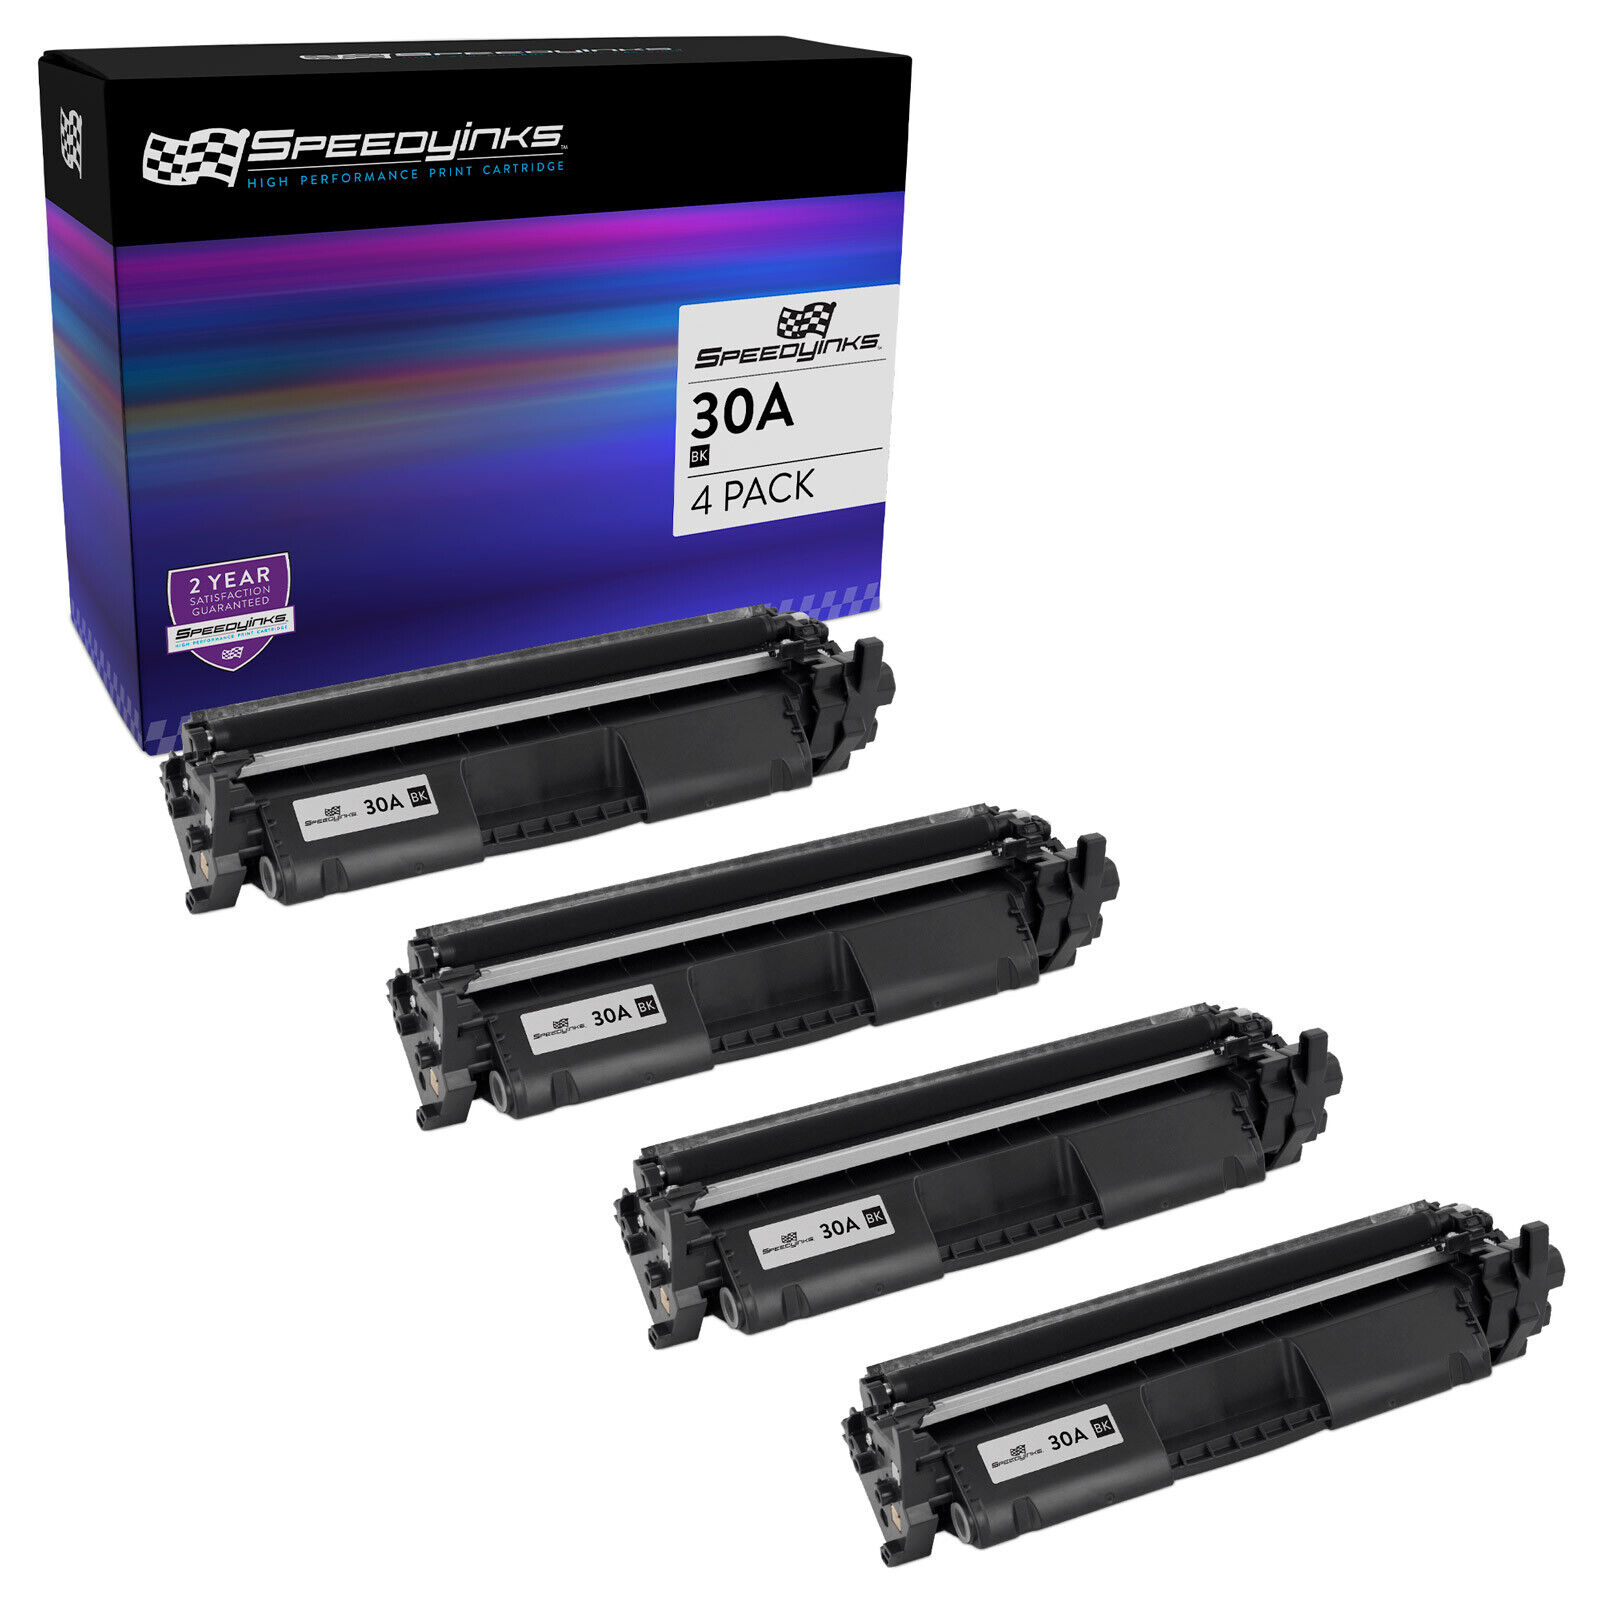 4PK Replacements for HP 30A CF230A Toner Cartridge Black for Laserjet Pro M203d